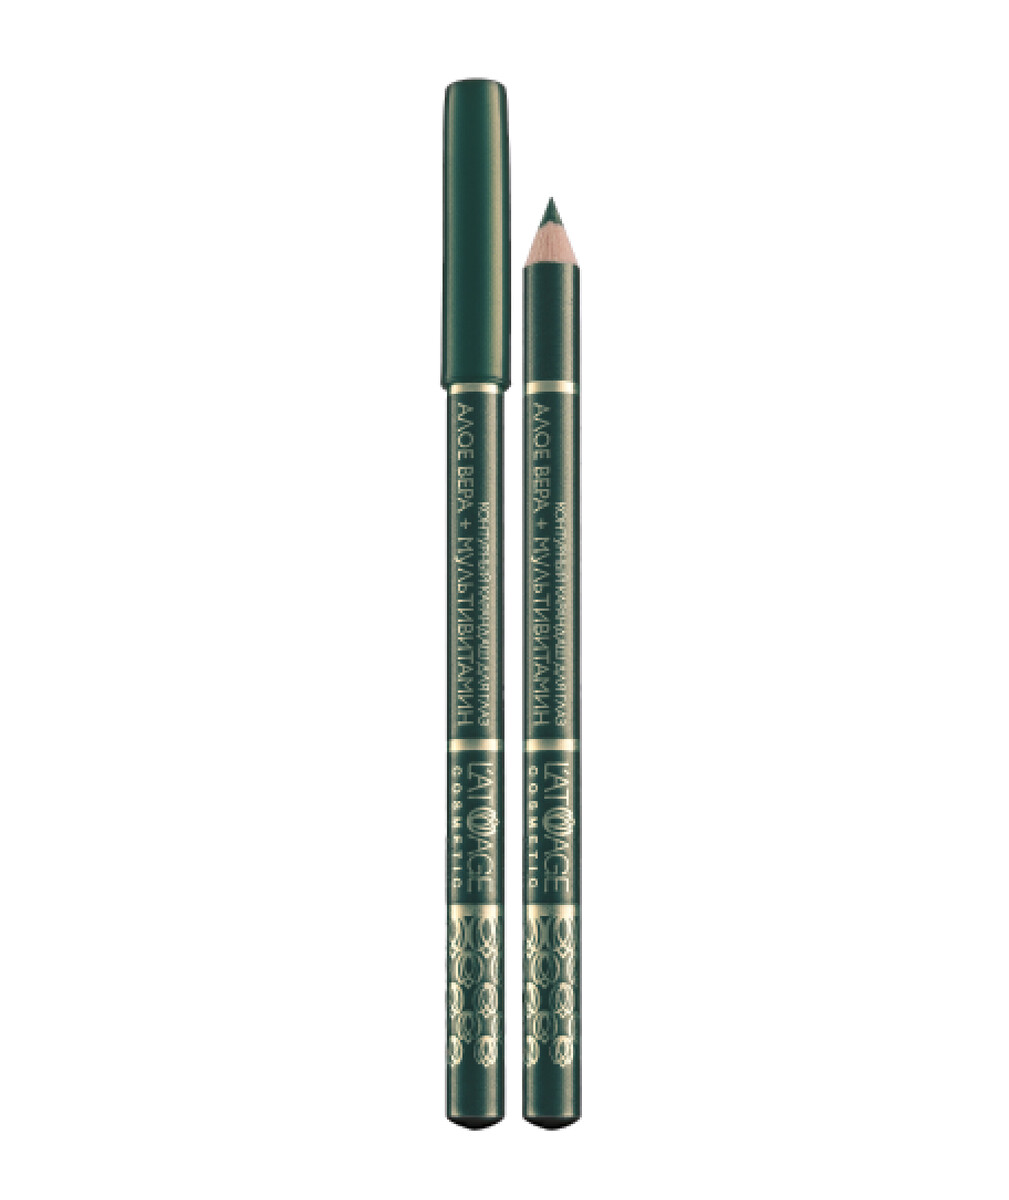 Контурный карандаш для глаз latuage cosmetic №42 (изумрудный) карандаш косметический контурный для глаз тон 20 серый 1 3г